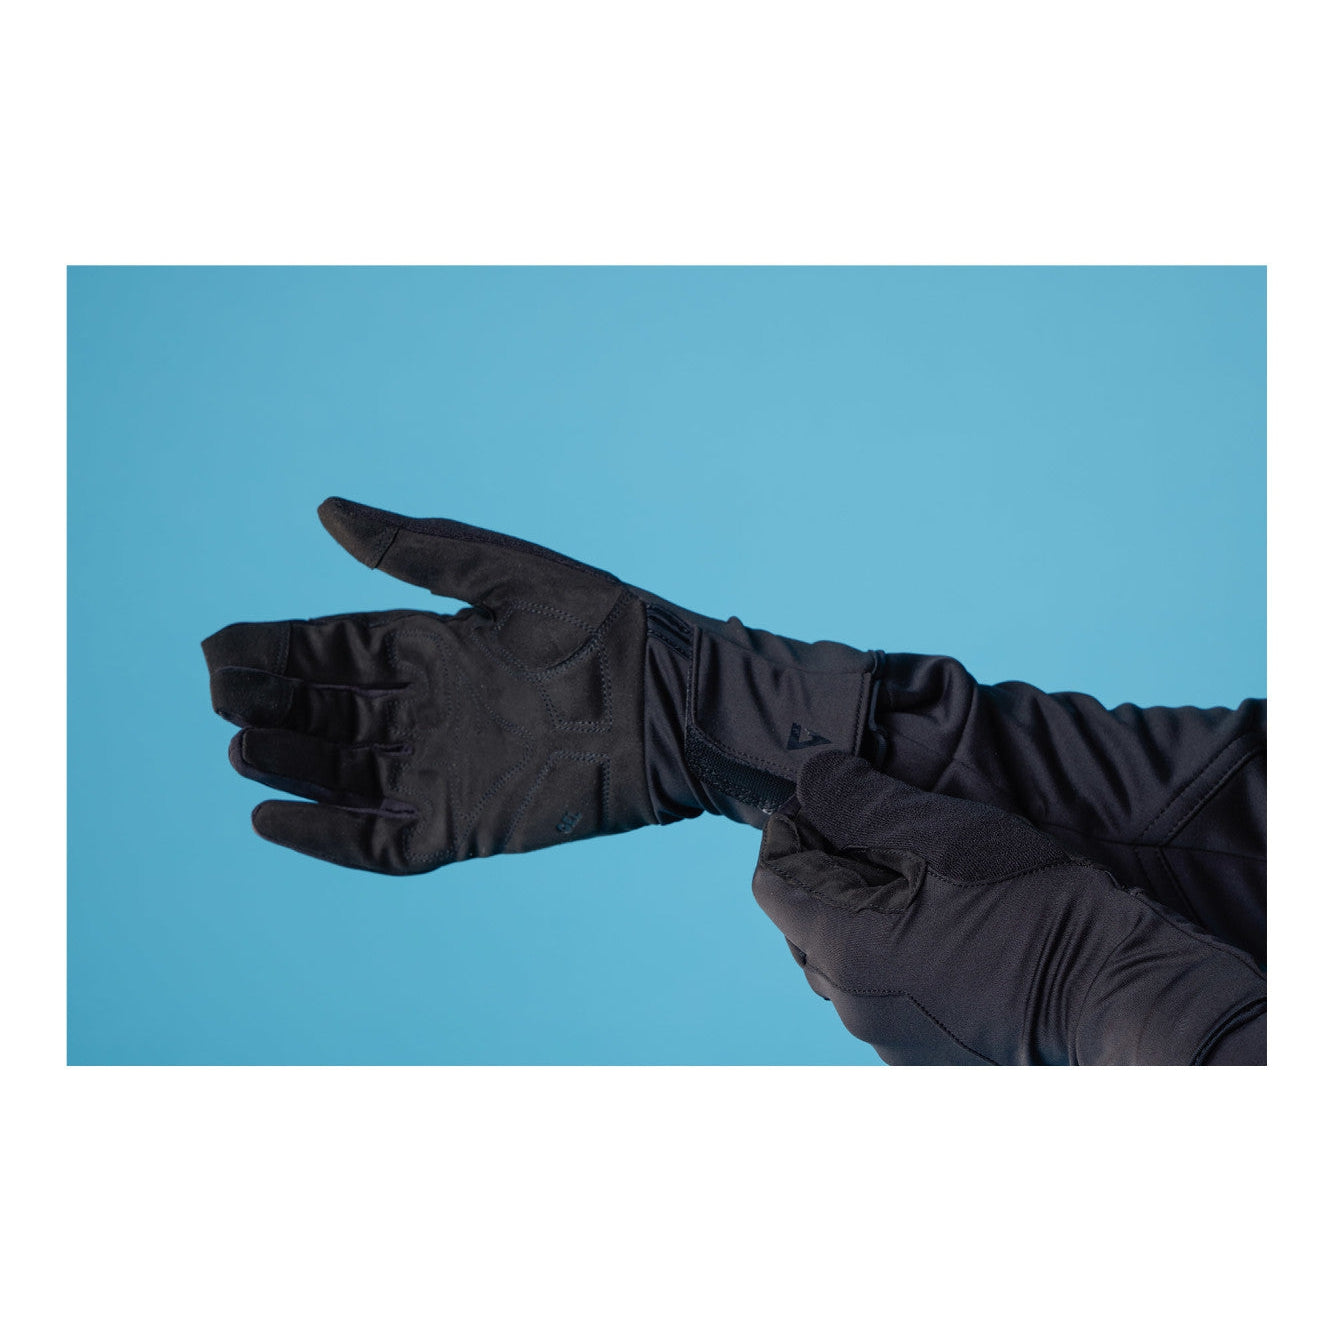 Giant Diversion Long Finger Bike Gloves - Gloves - Bicycle Warehouse